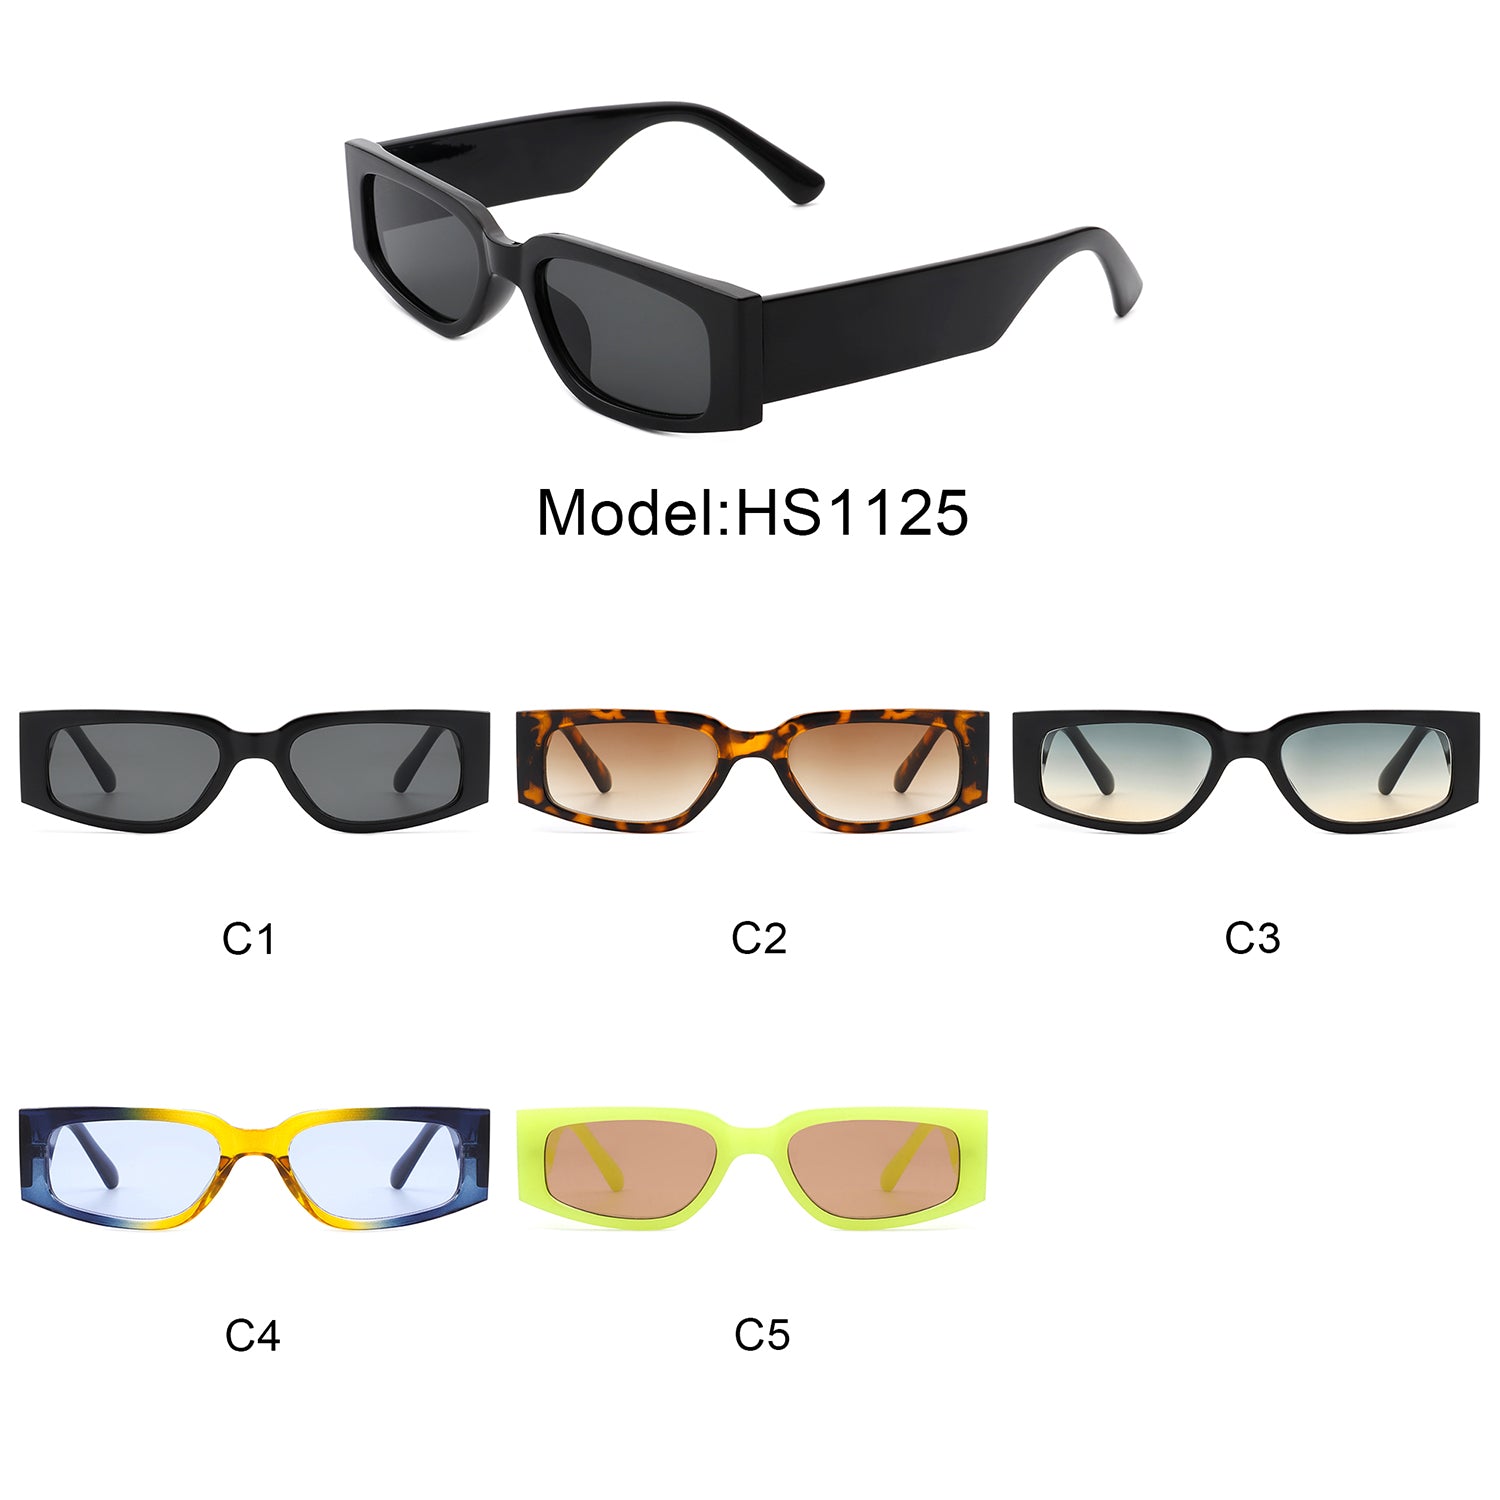 S2092 - Women Cat Eye Fashion Sunglasses Black